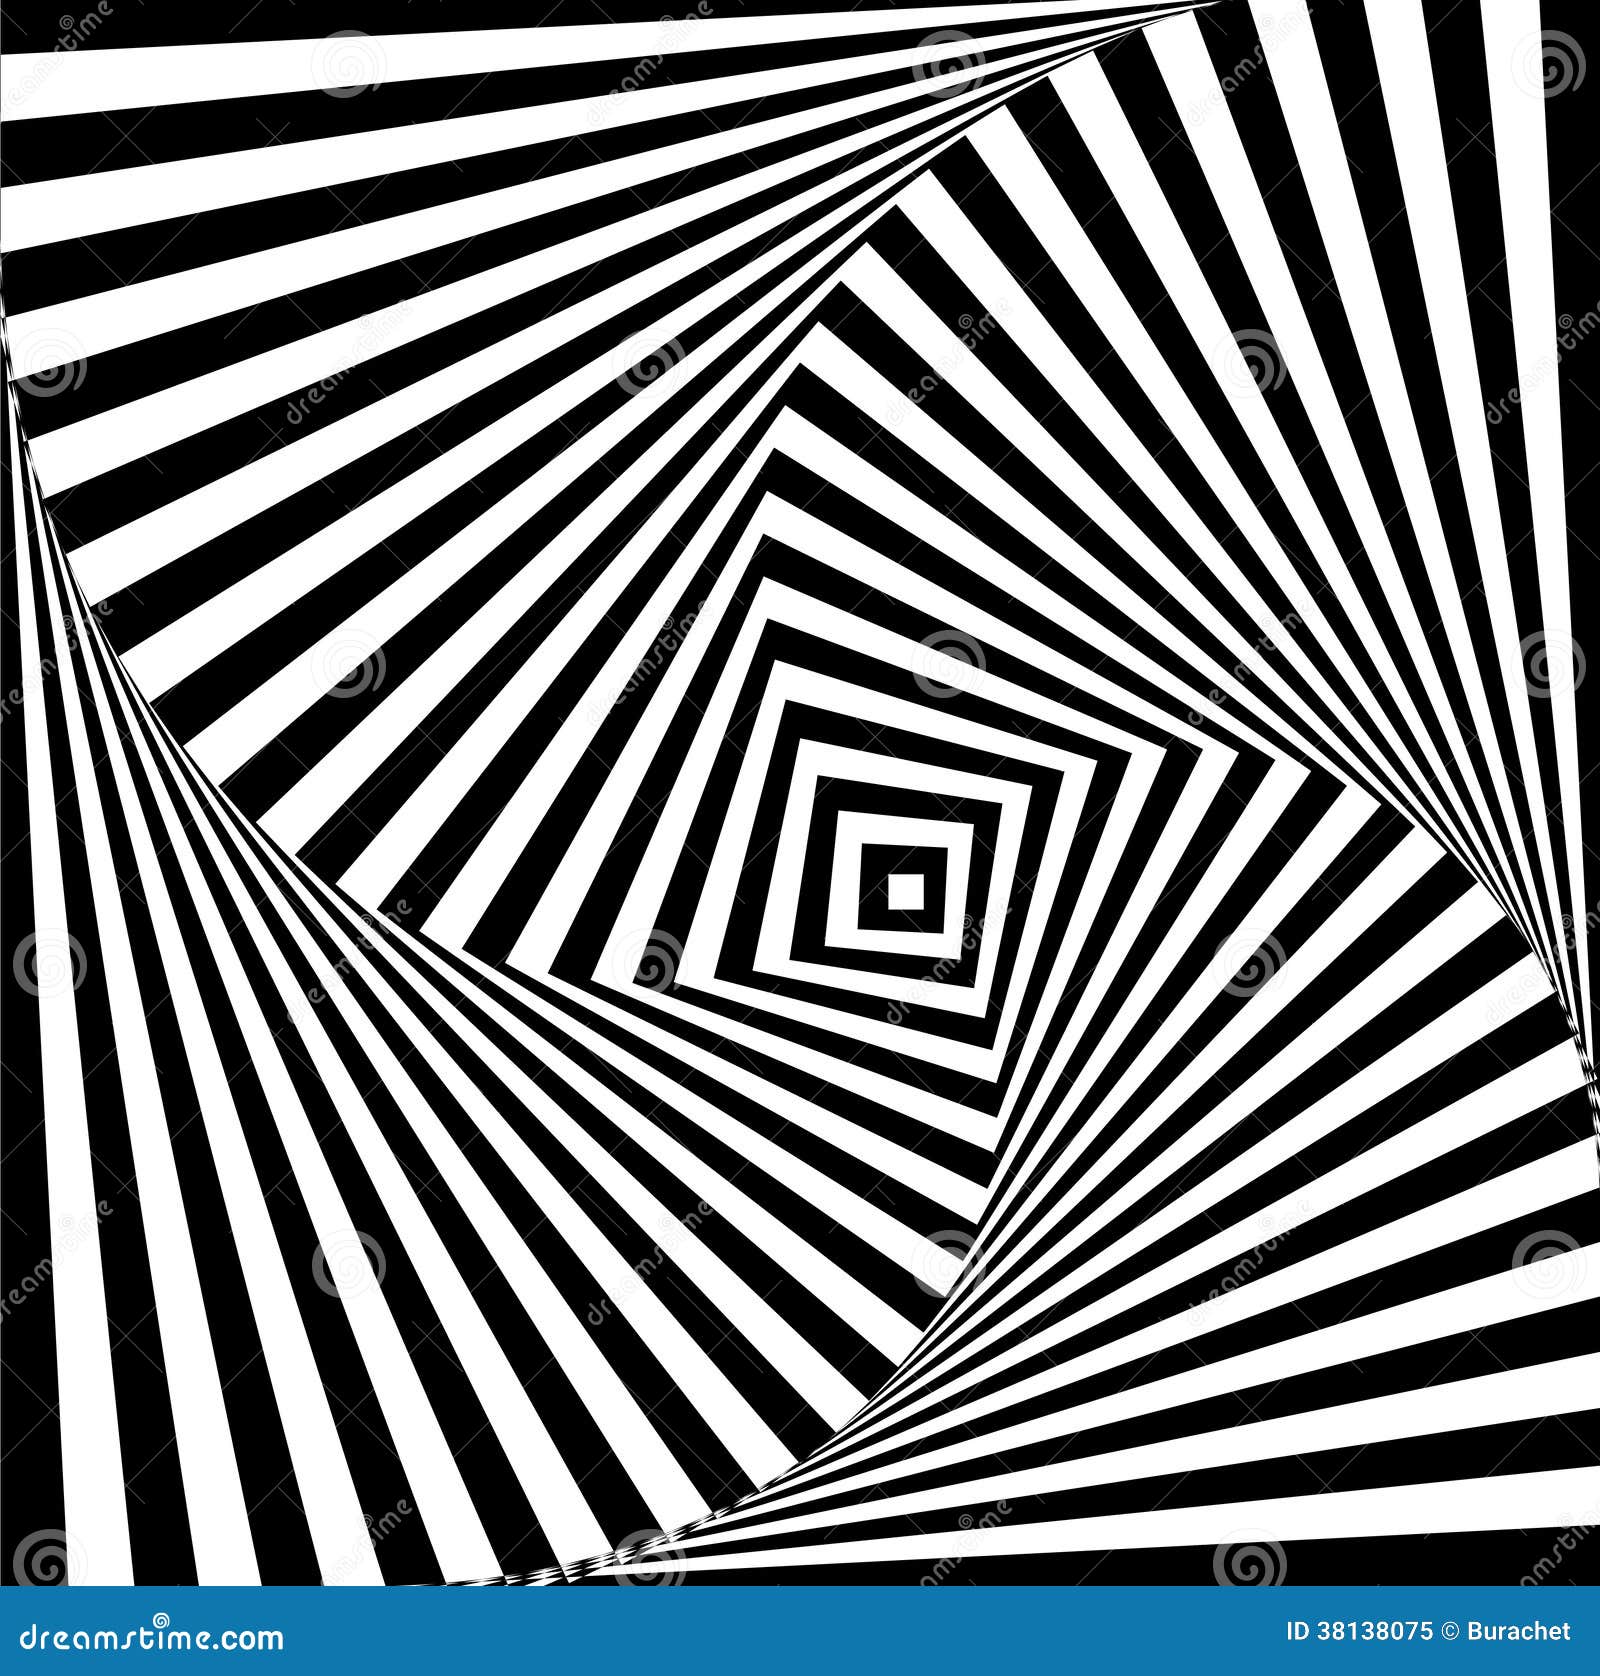 twisted square pattern black white 38138075